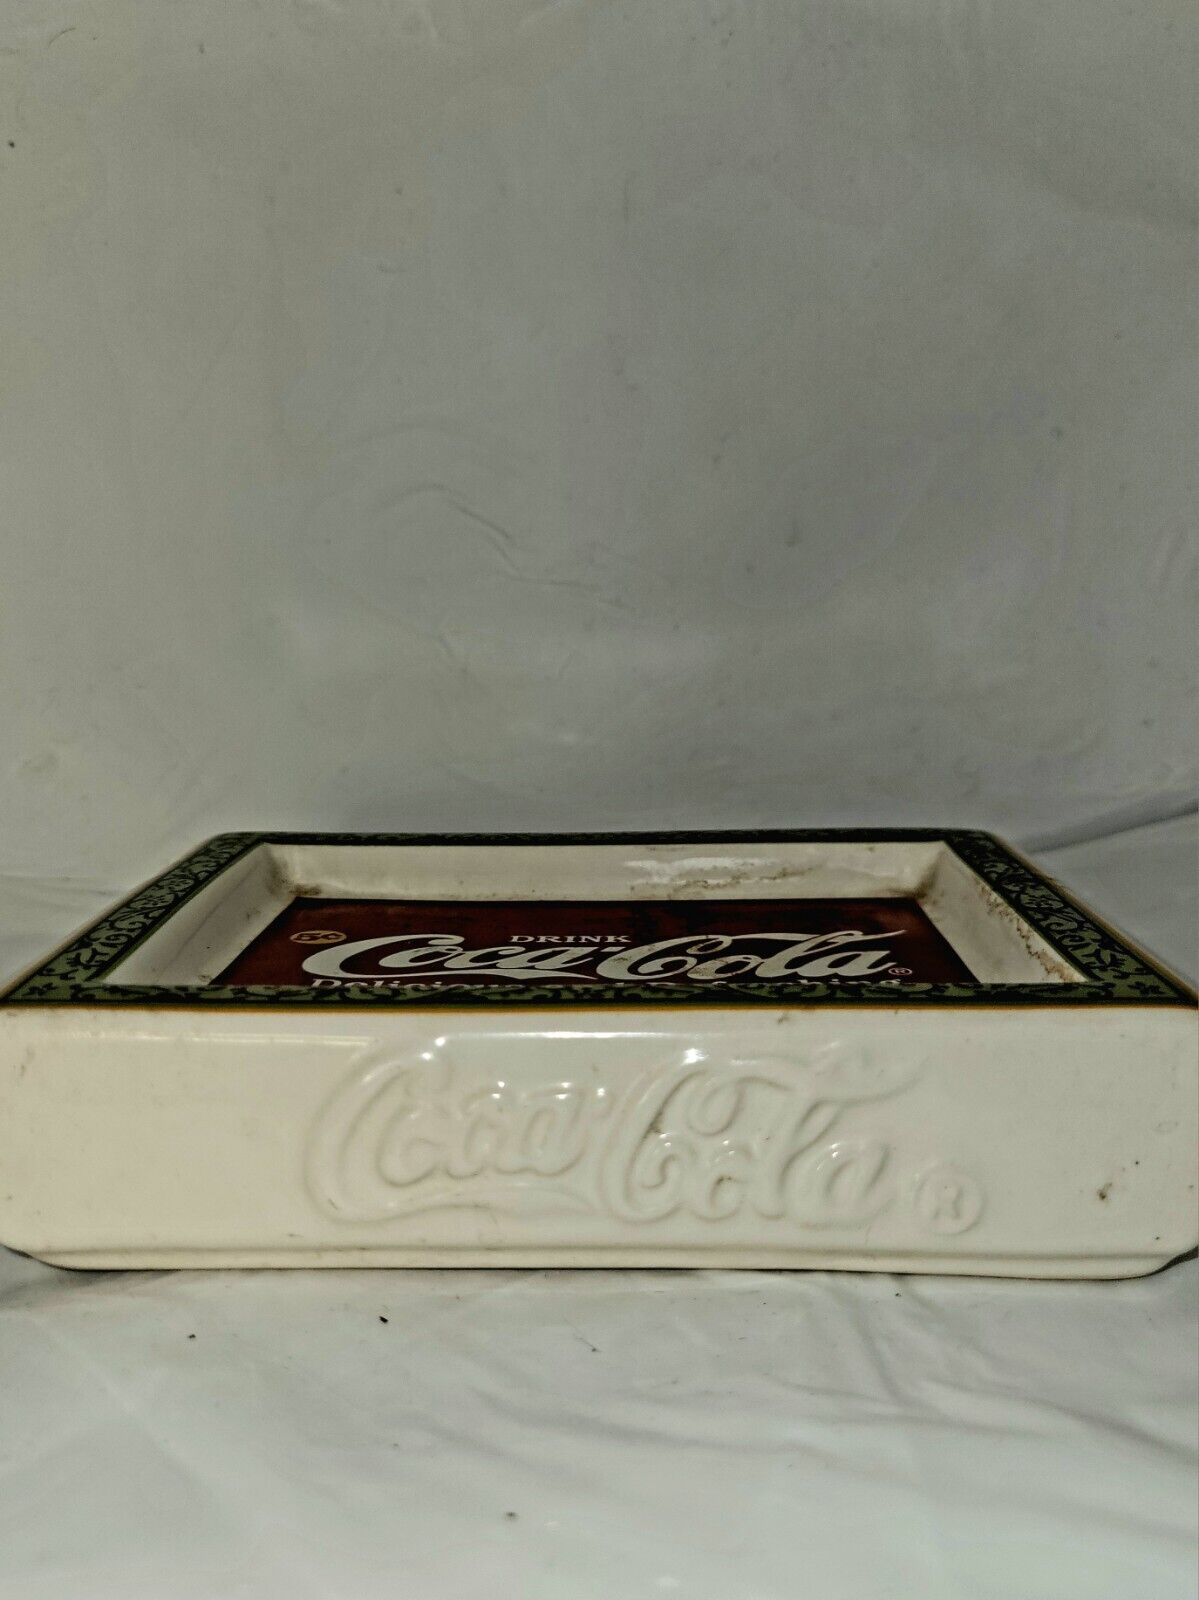  Vintage Retro Coca Cola Coke Ceramic Soap Dish / Trinket Holder